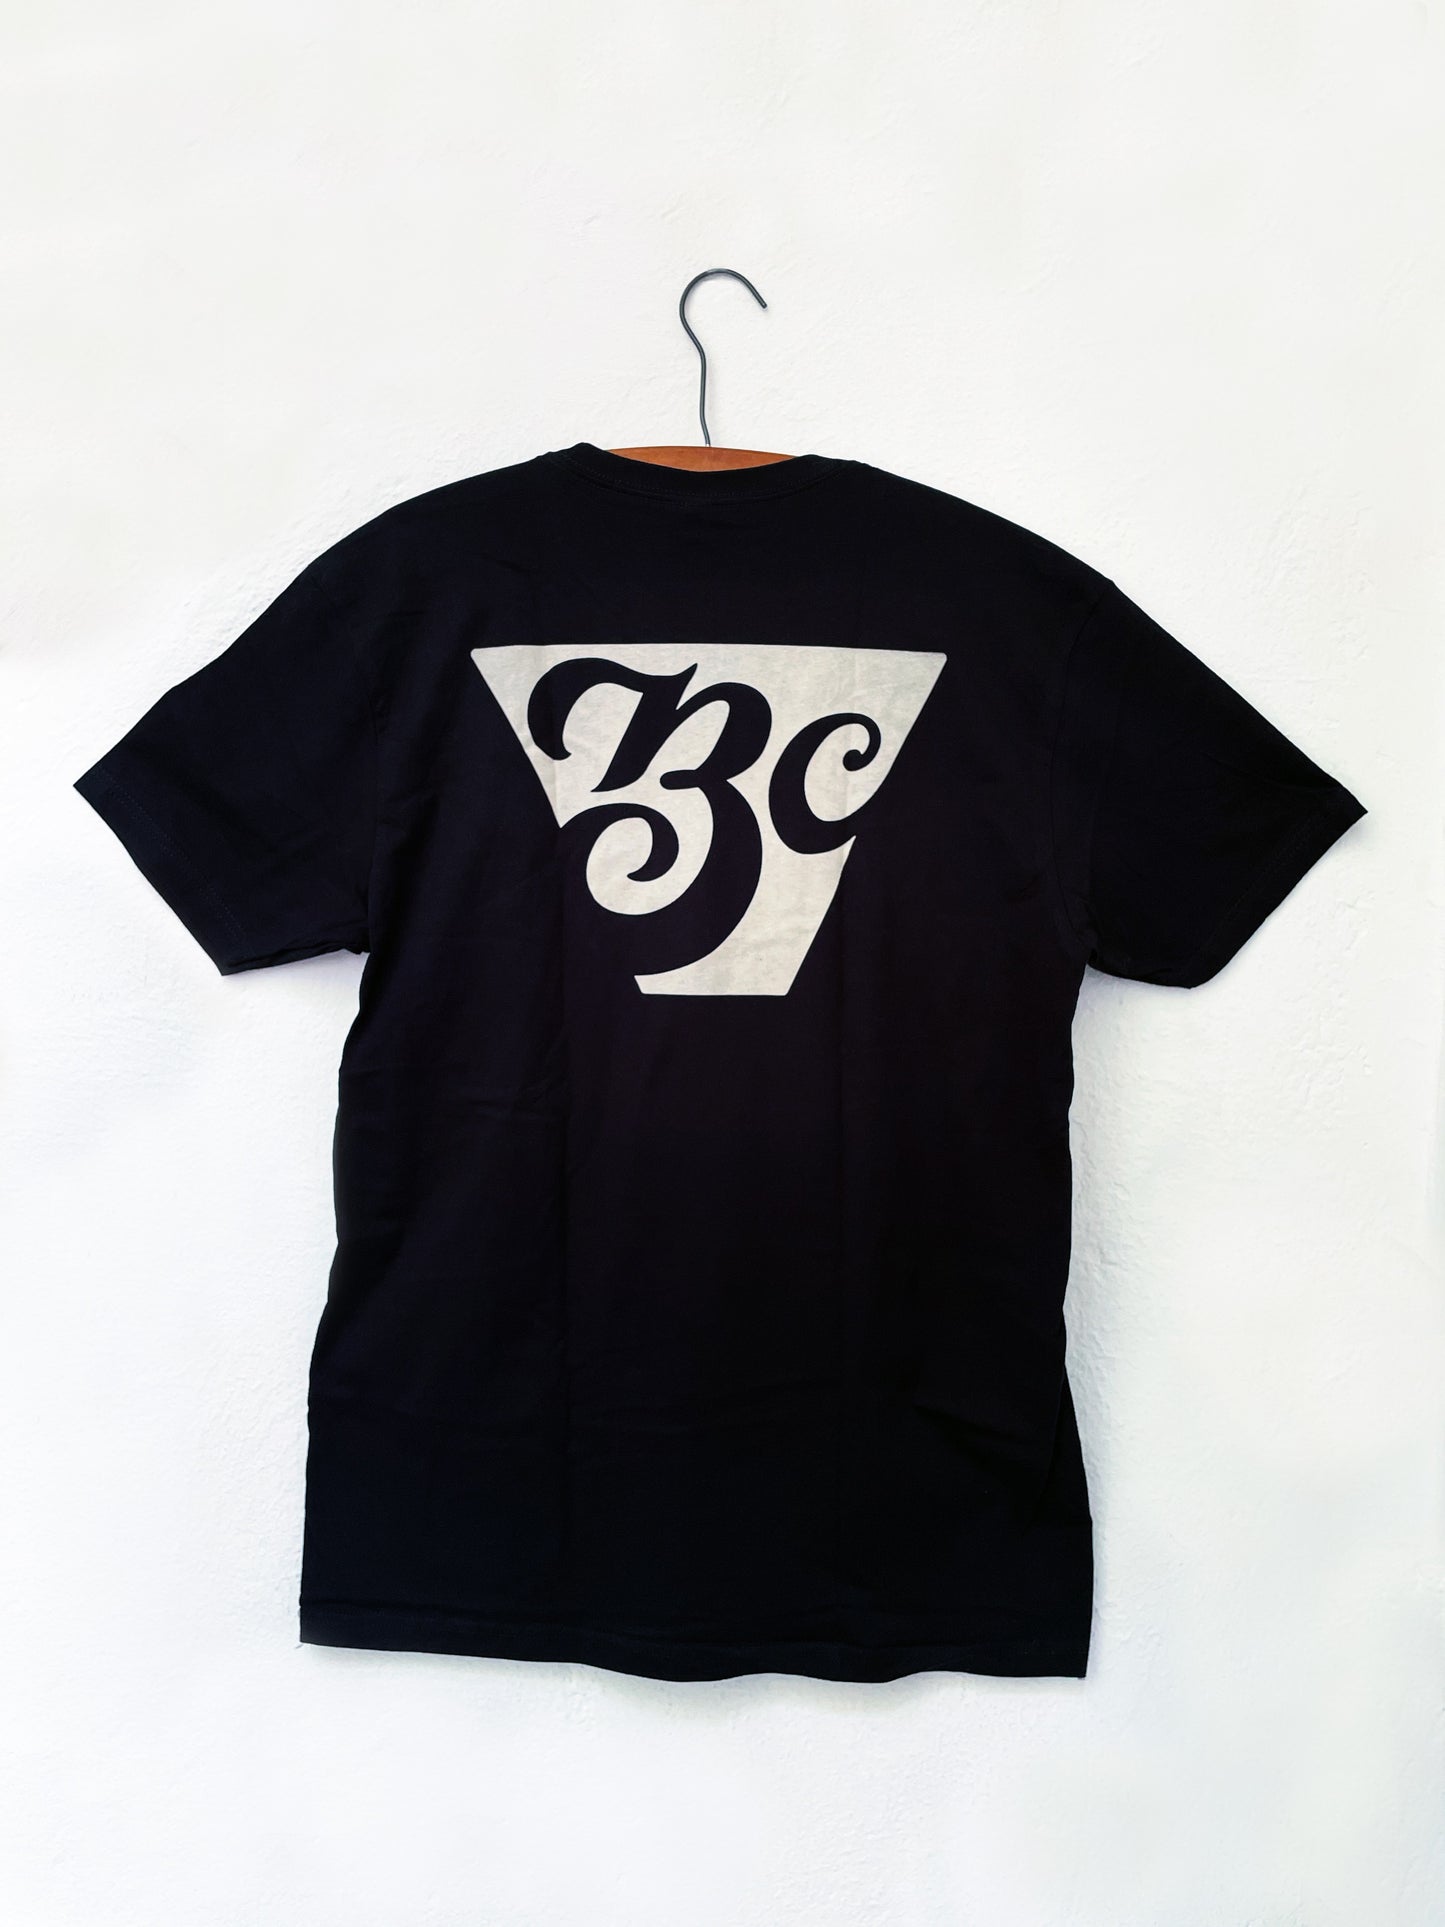 Better Company Records T-shirt